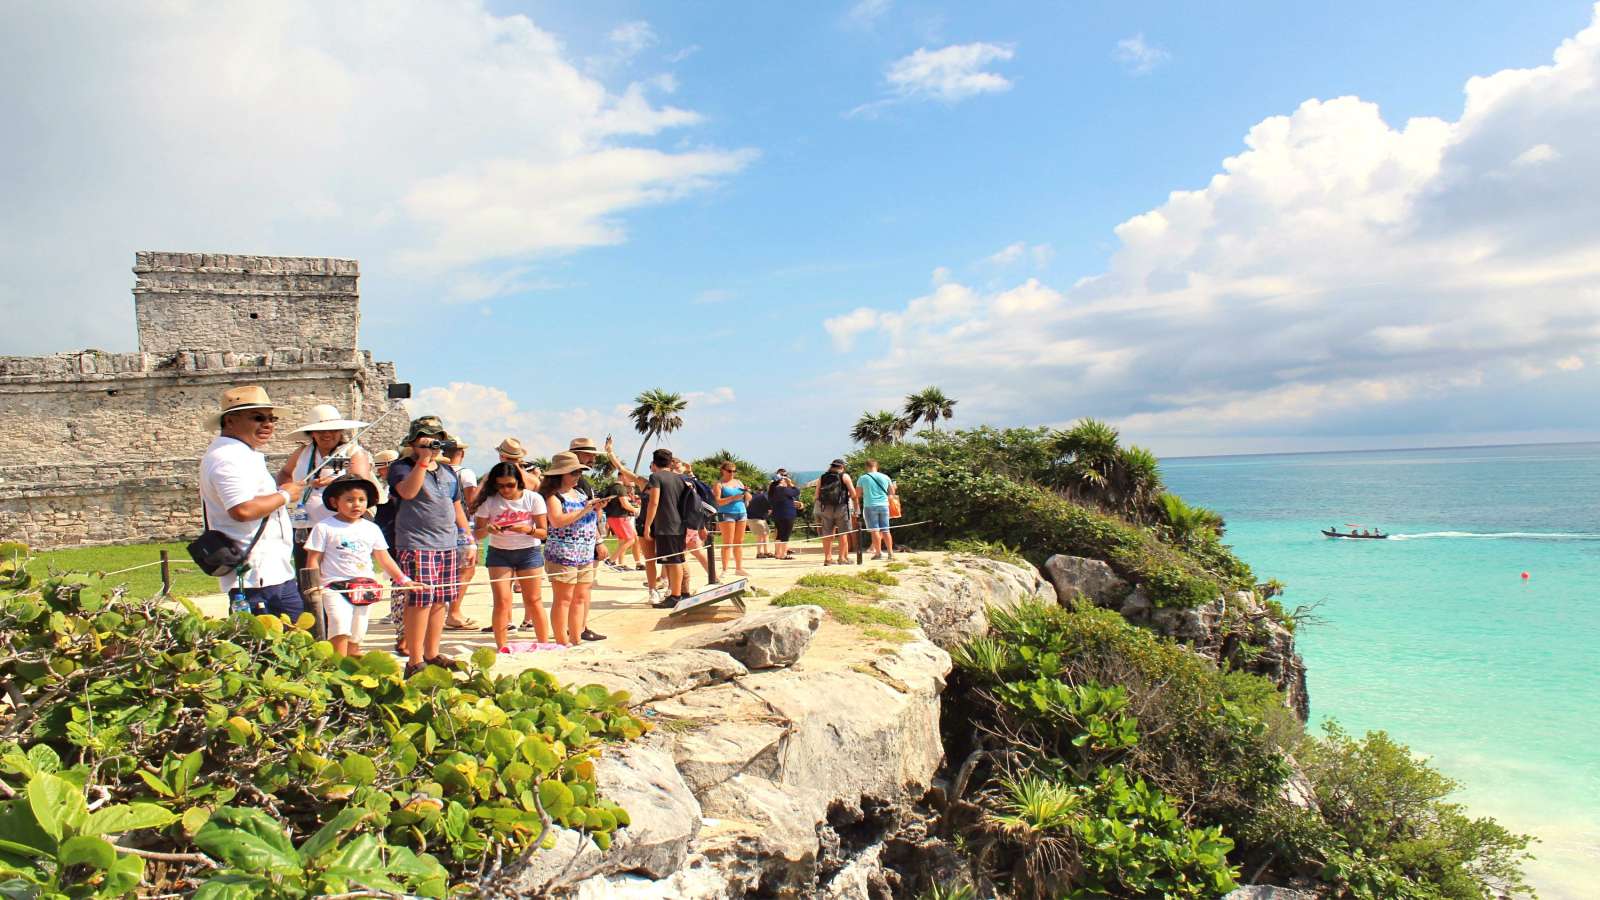 tulum - cenotes - estatua madre naturaleza y playa del carmen 5